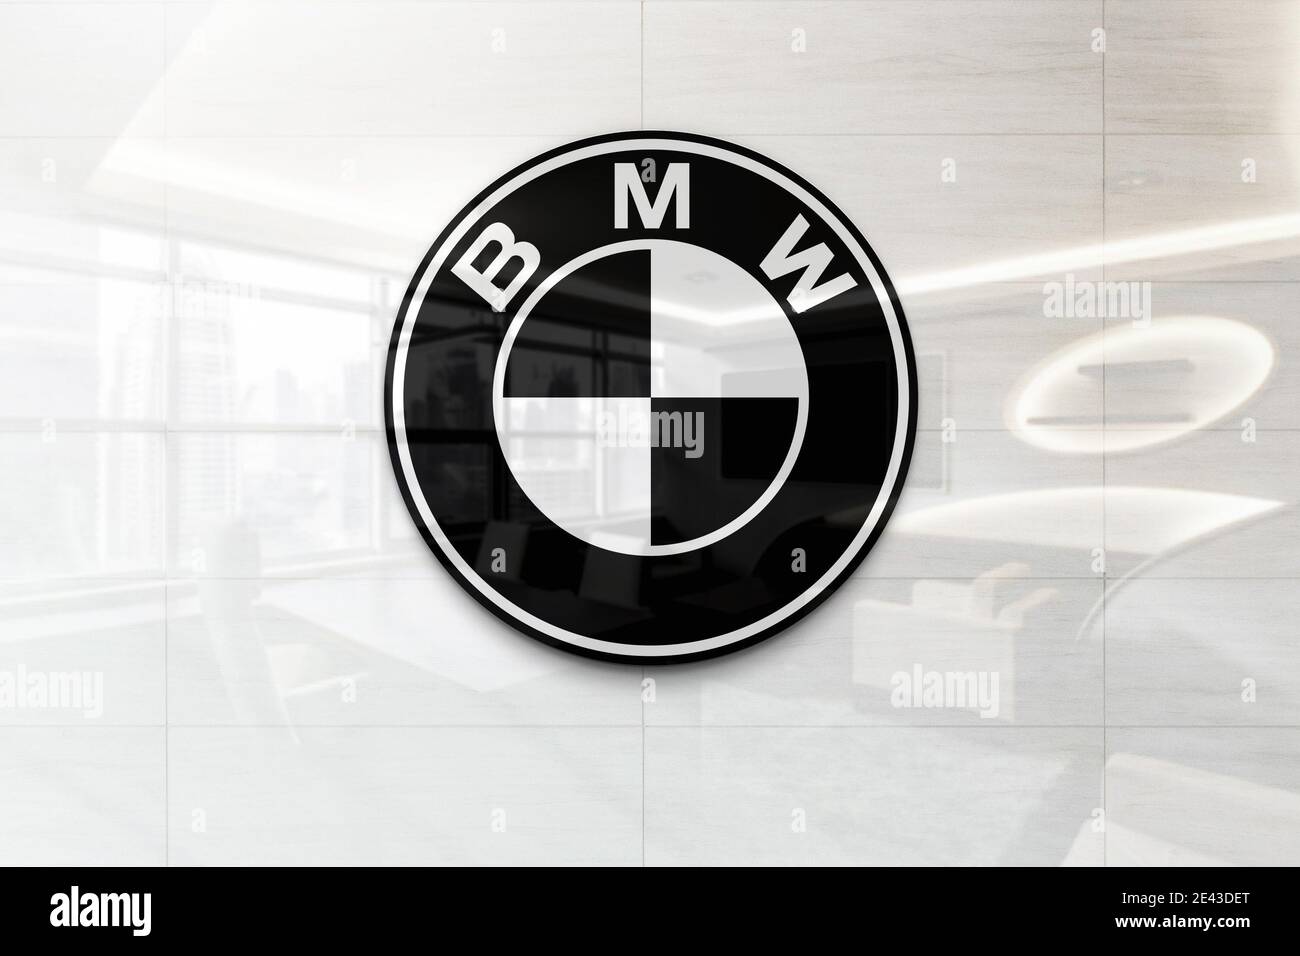 bmw logo Stock Photo